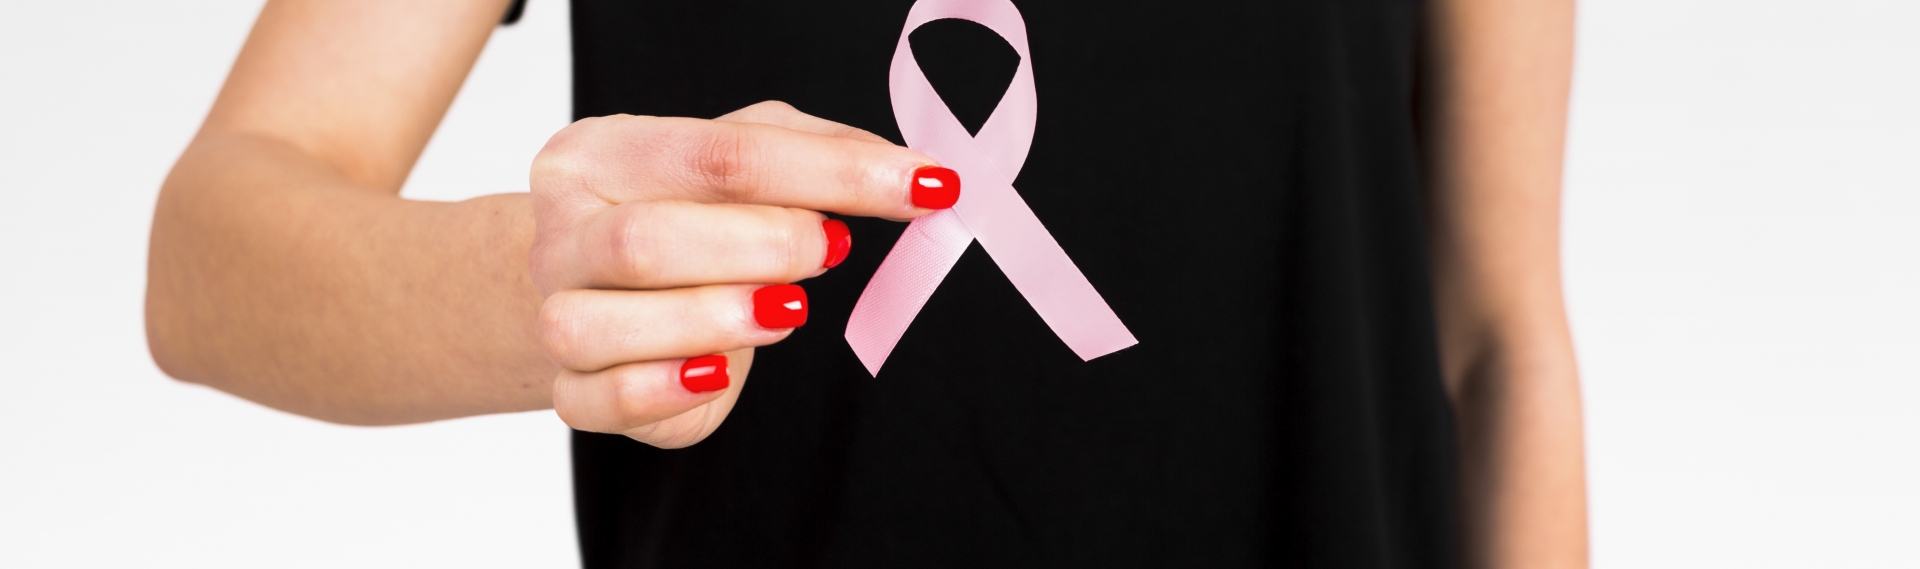 femme tenant un ruban rose symbole du cancer du sein